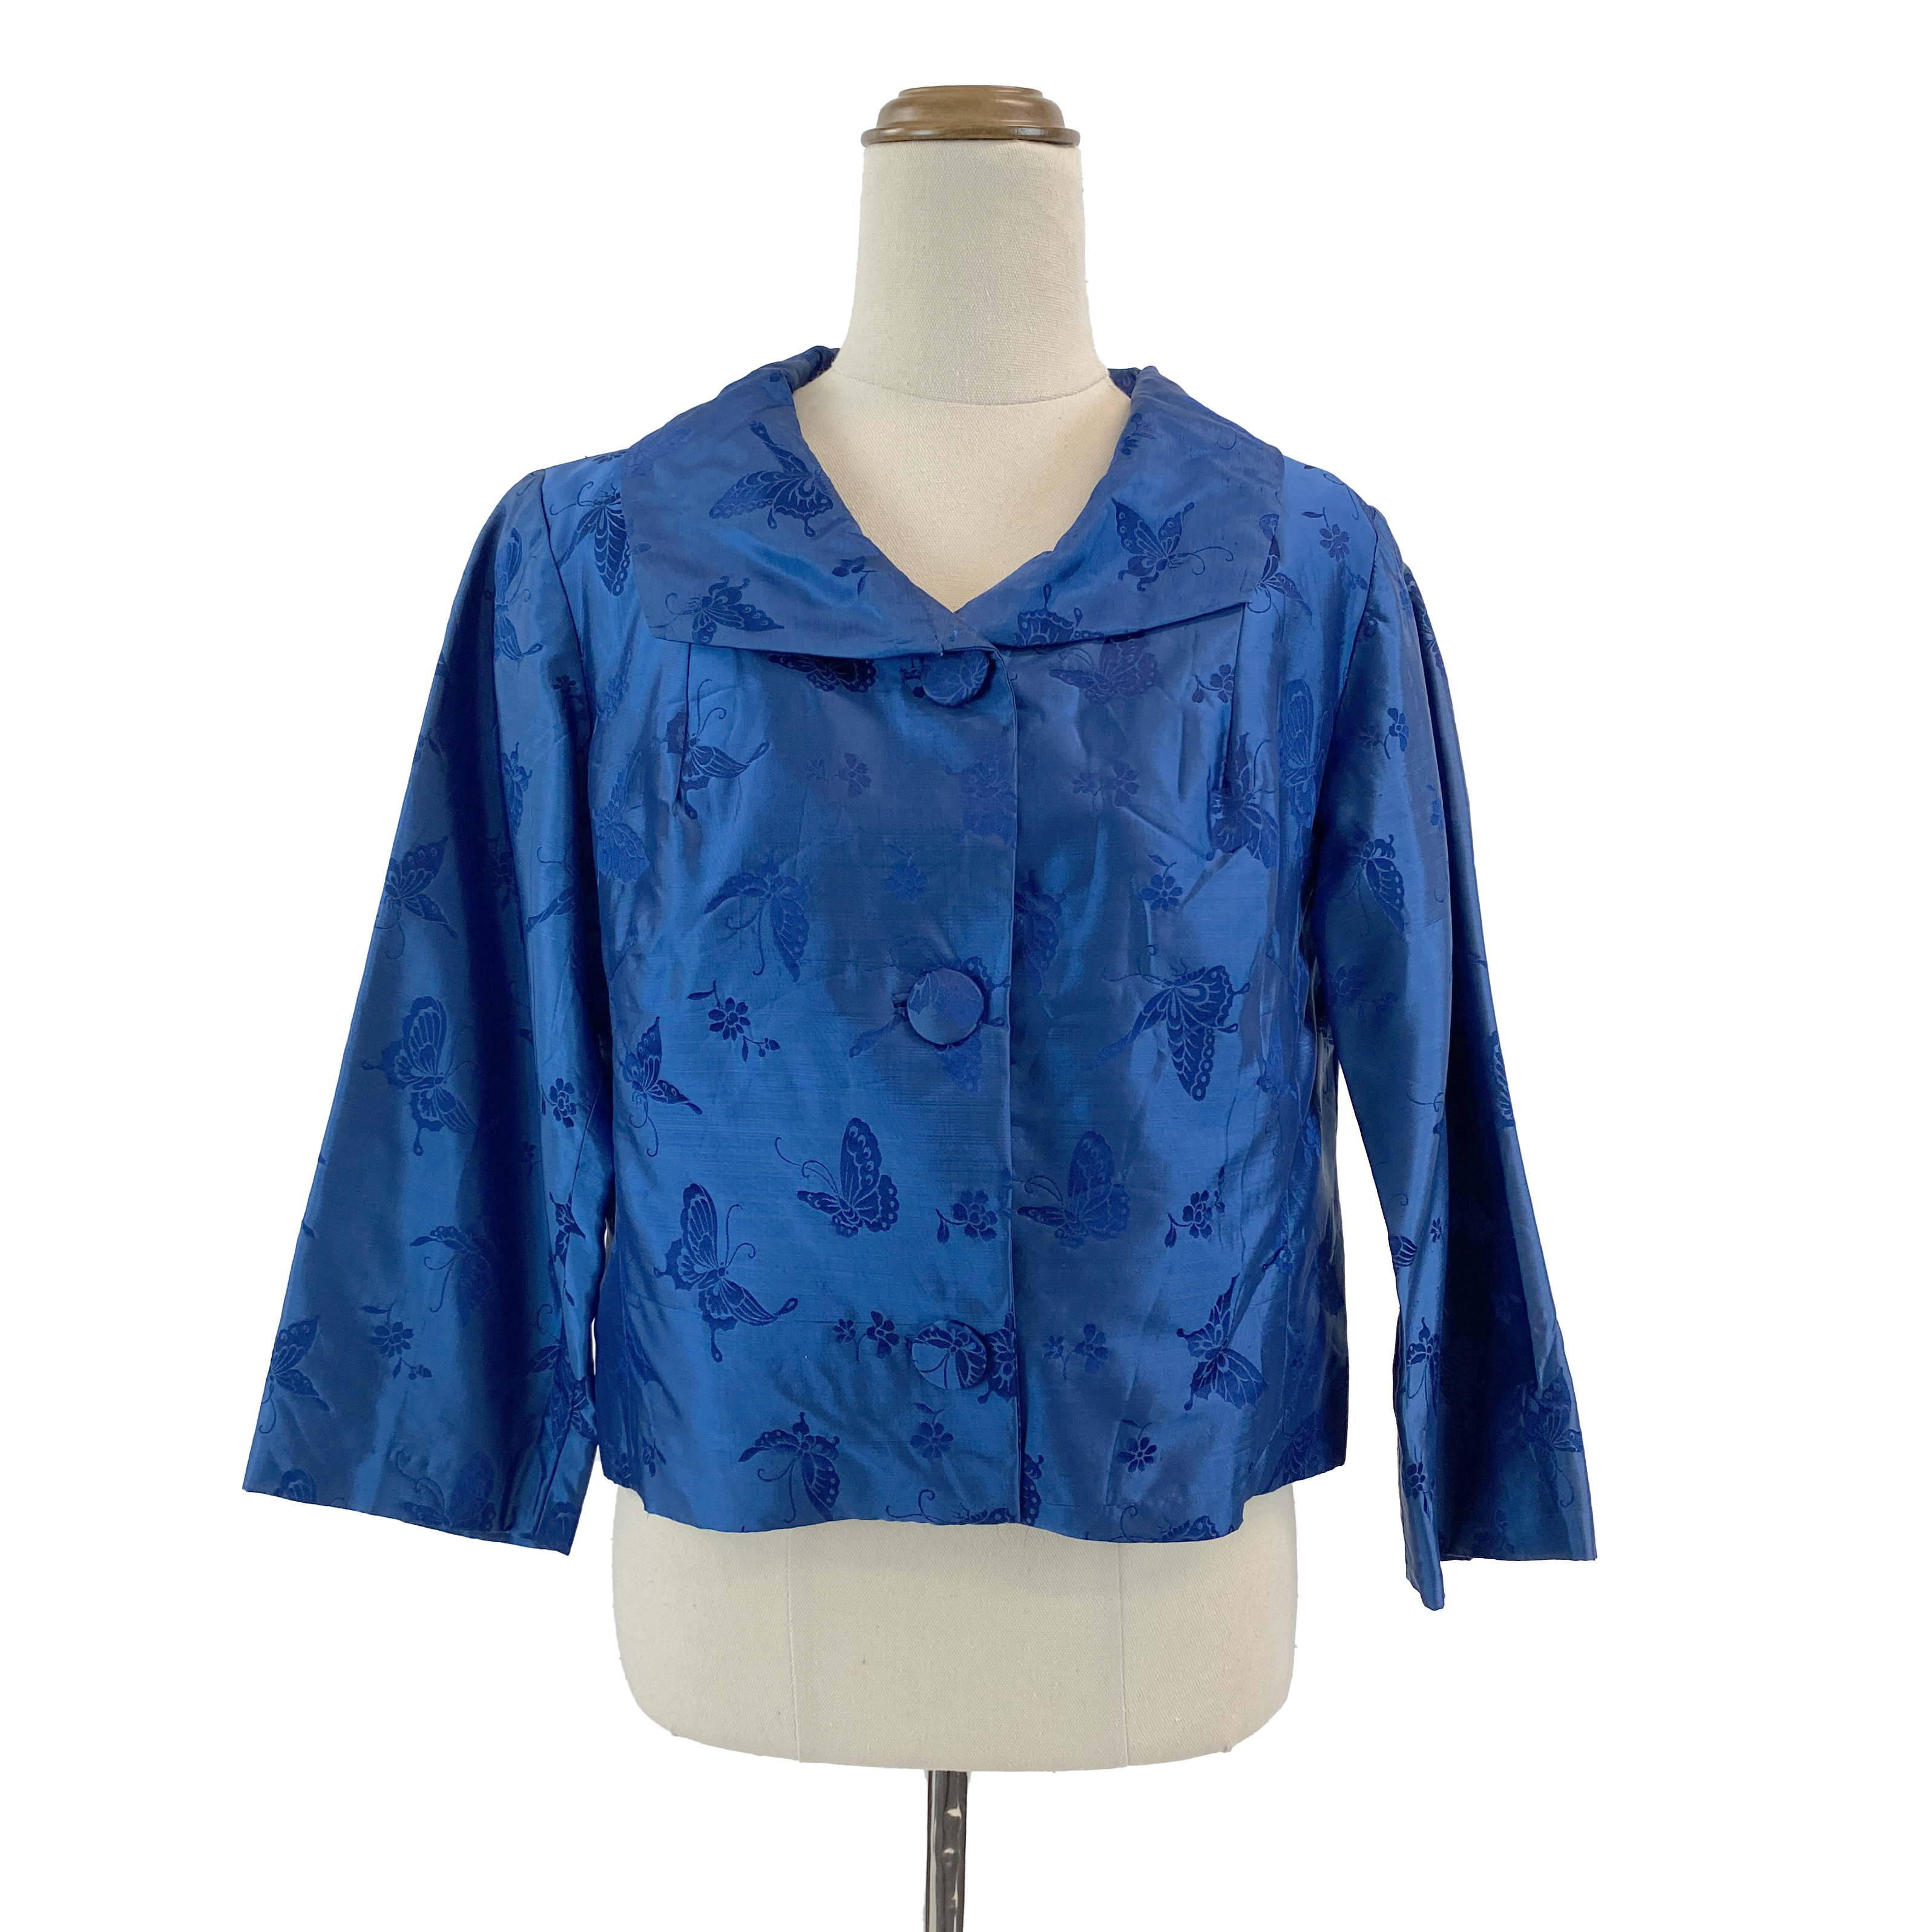 Maria Docx 60s Style Vibrant Blue Jacket